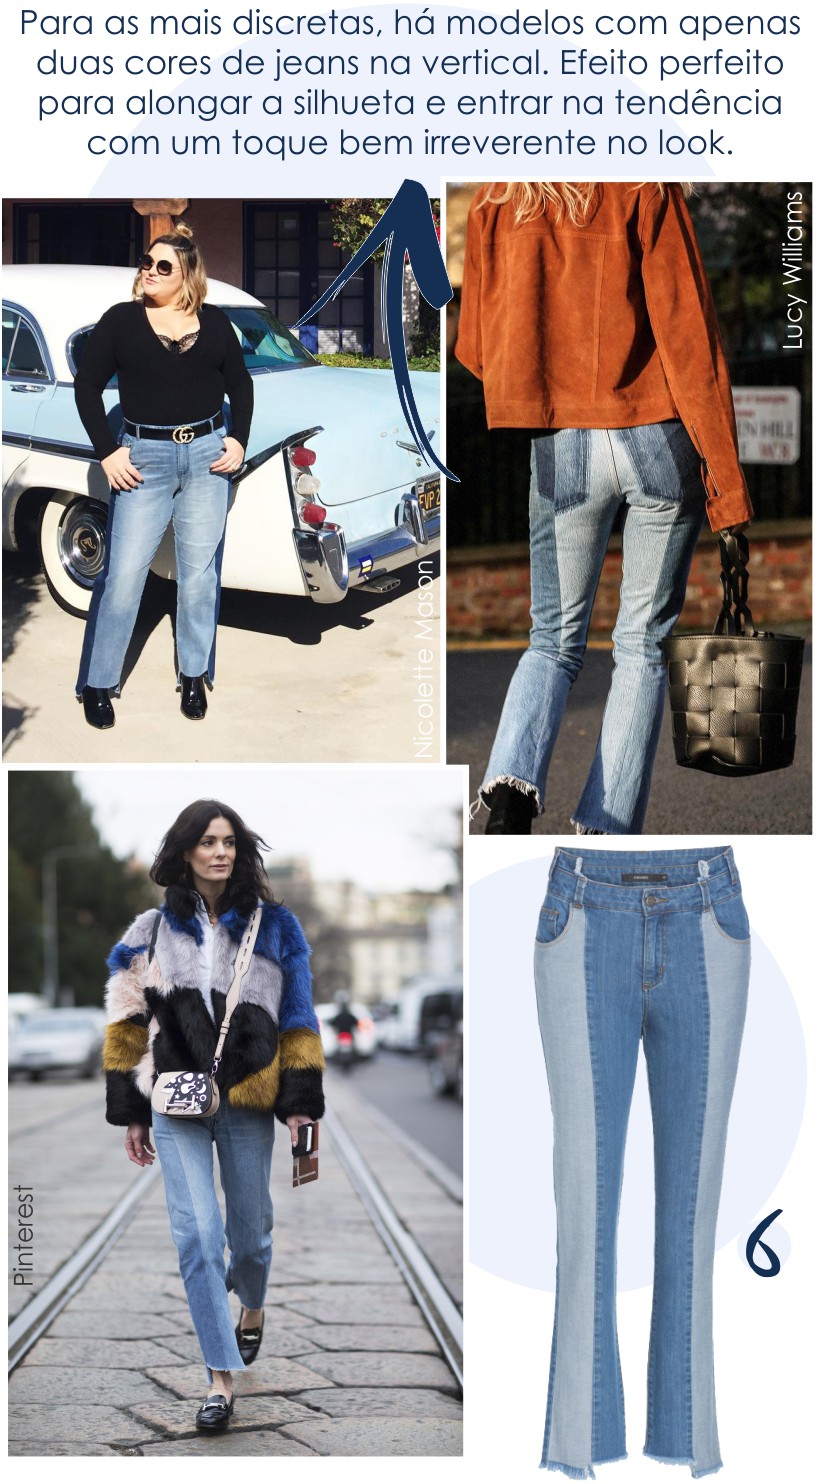 jeans com duas cores na vertical